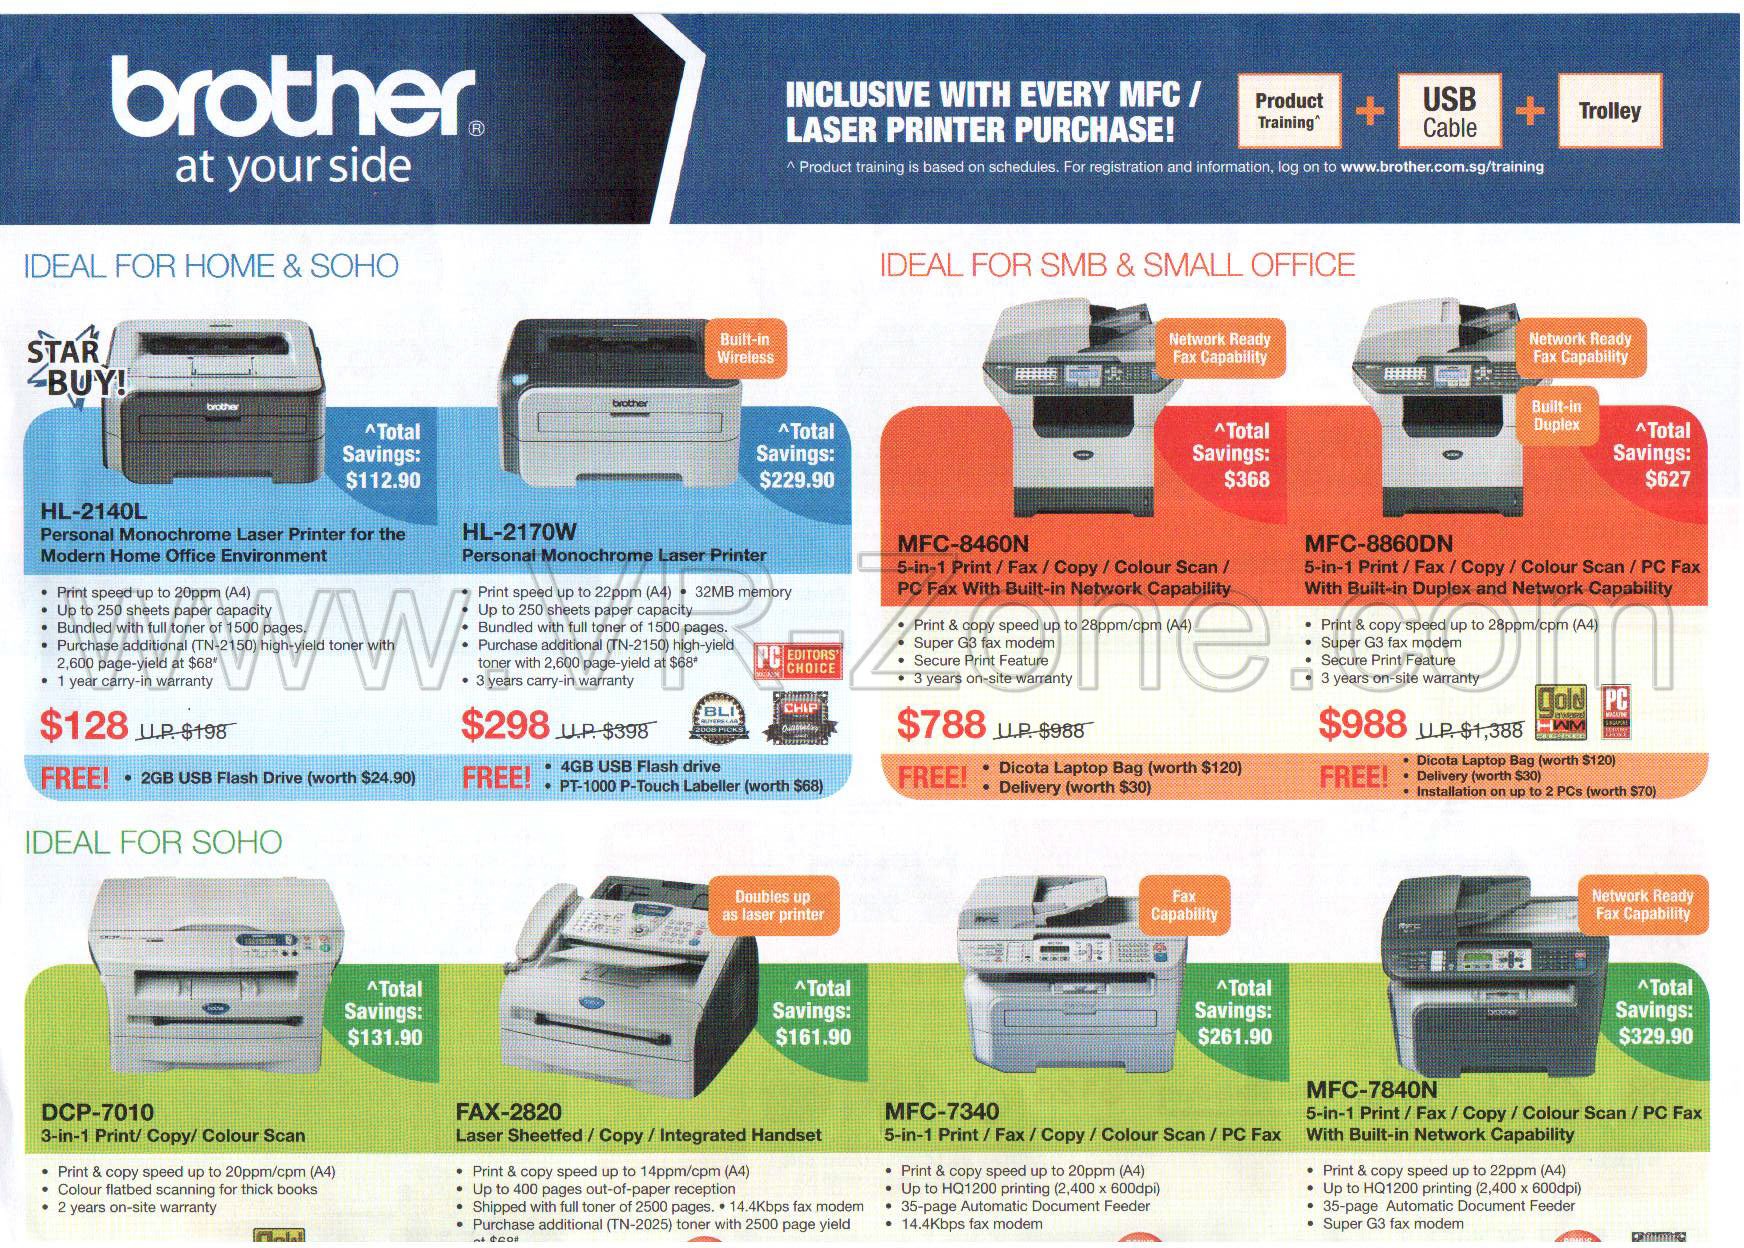 Sitex 2008 price list image brochure of Brother Printers 3